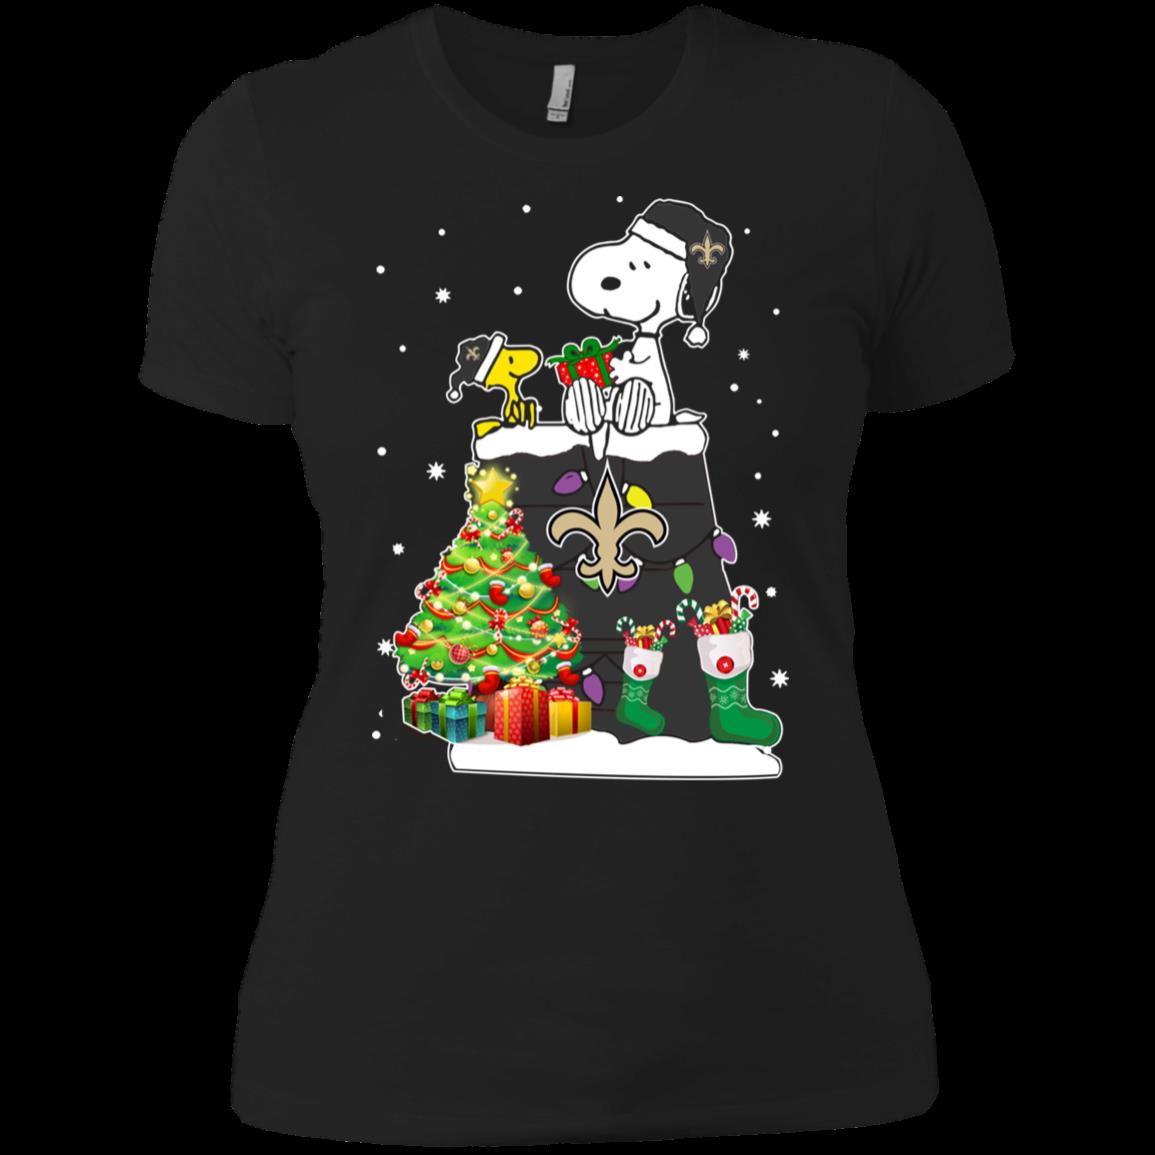 New Orleans Saints Snoopy & Woodstock Christmas Shirt Ladies’ Boyfriend Shirt